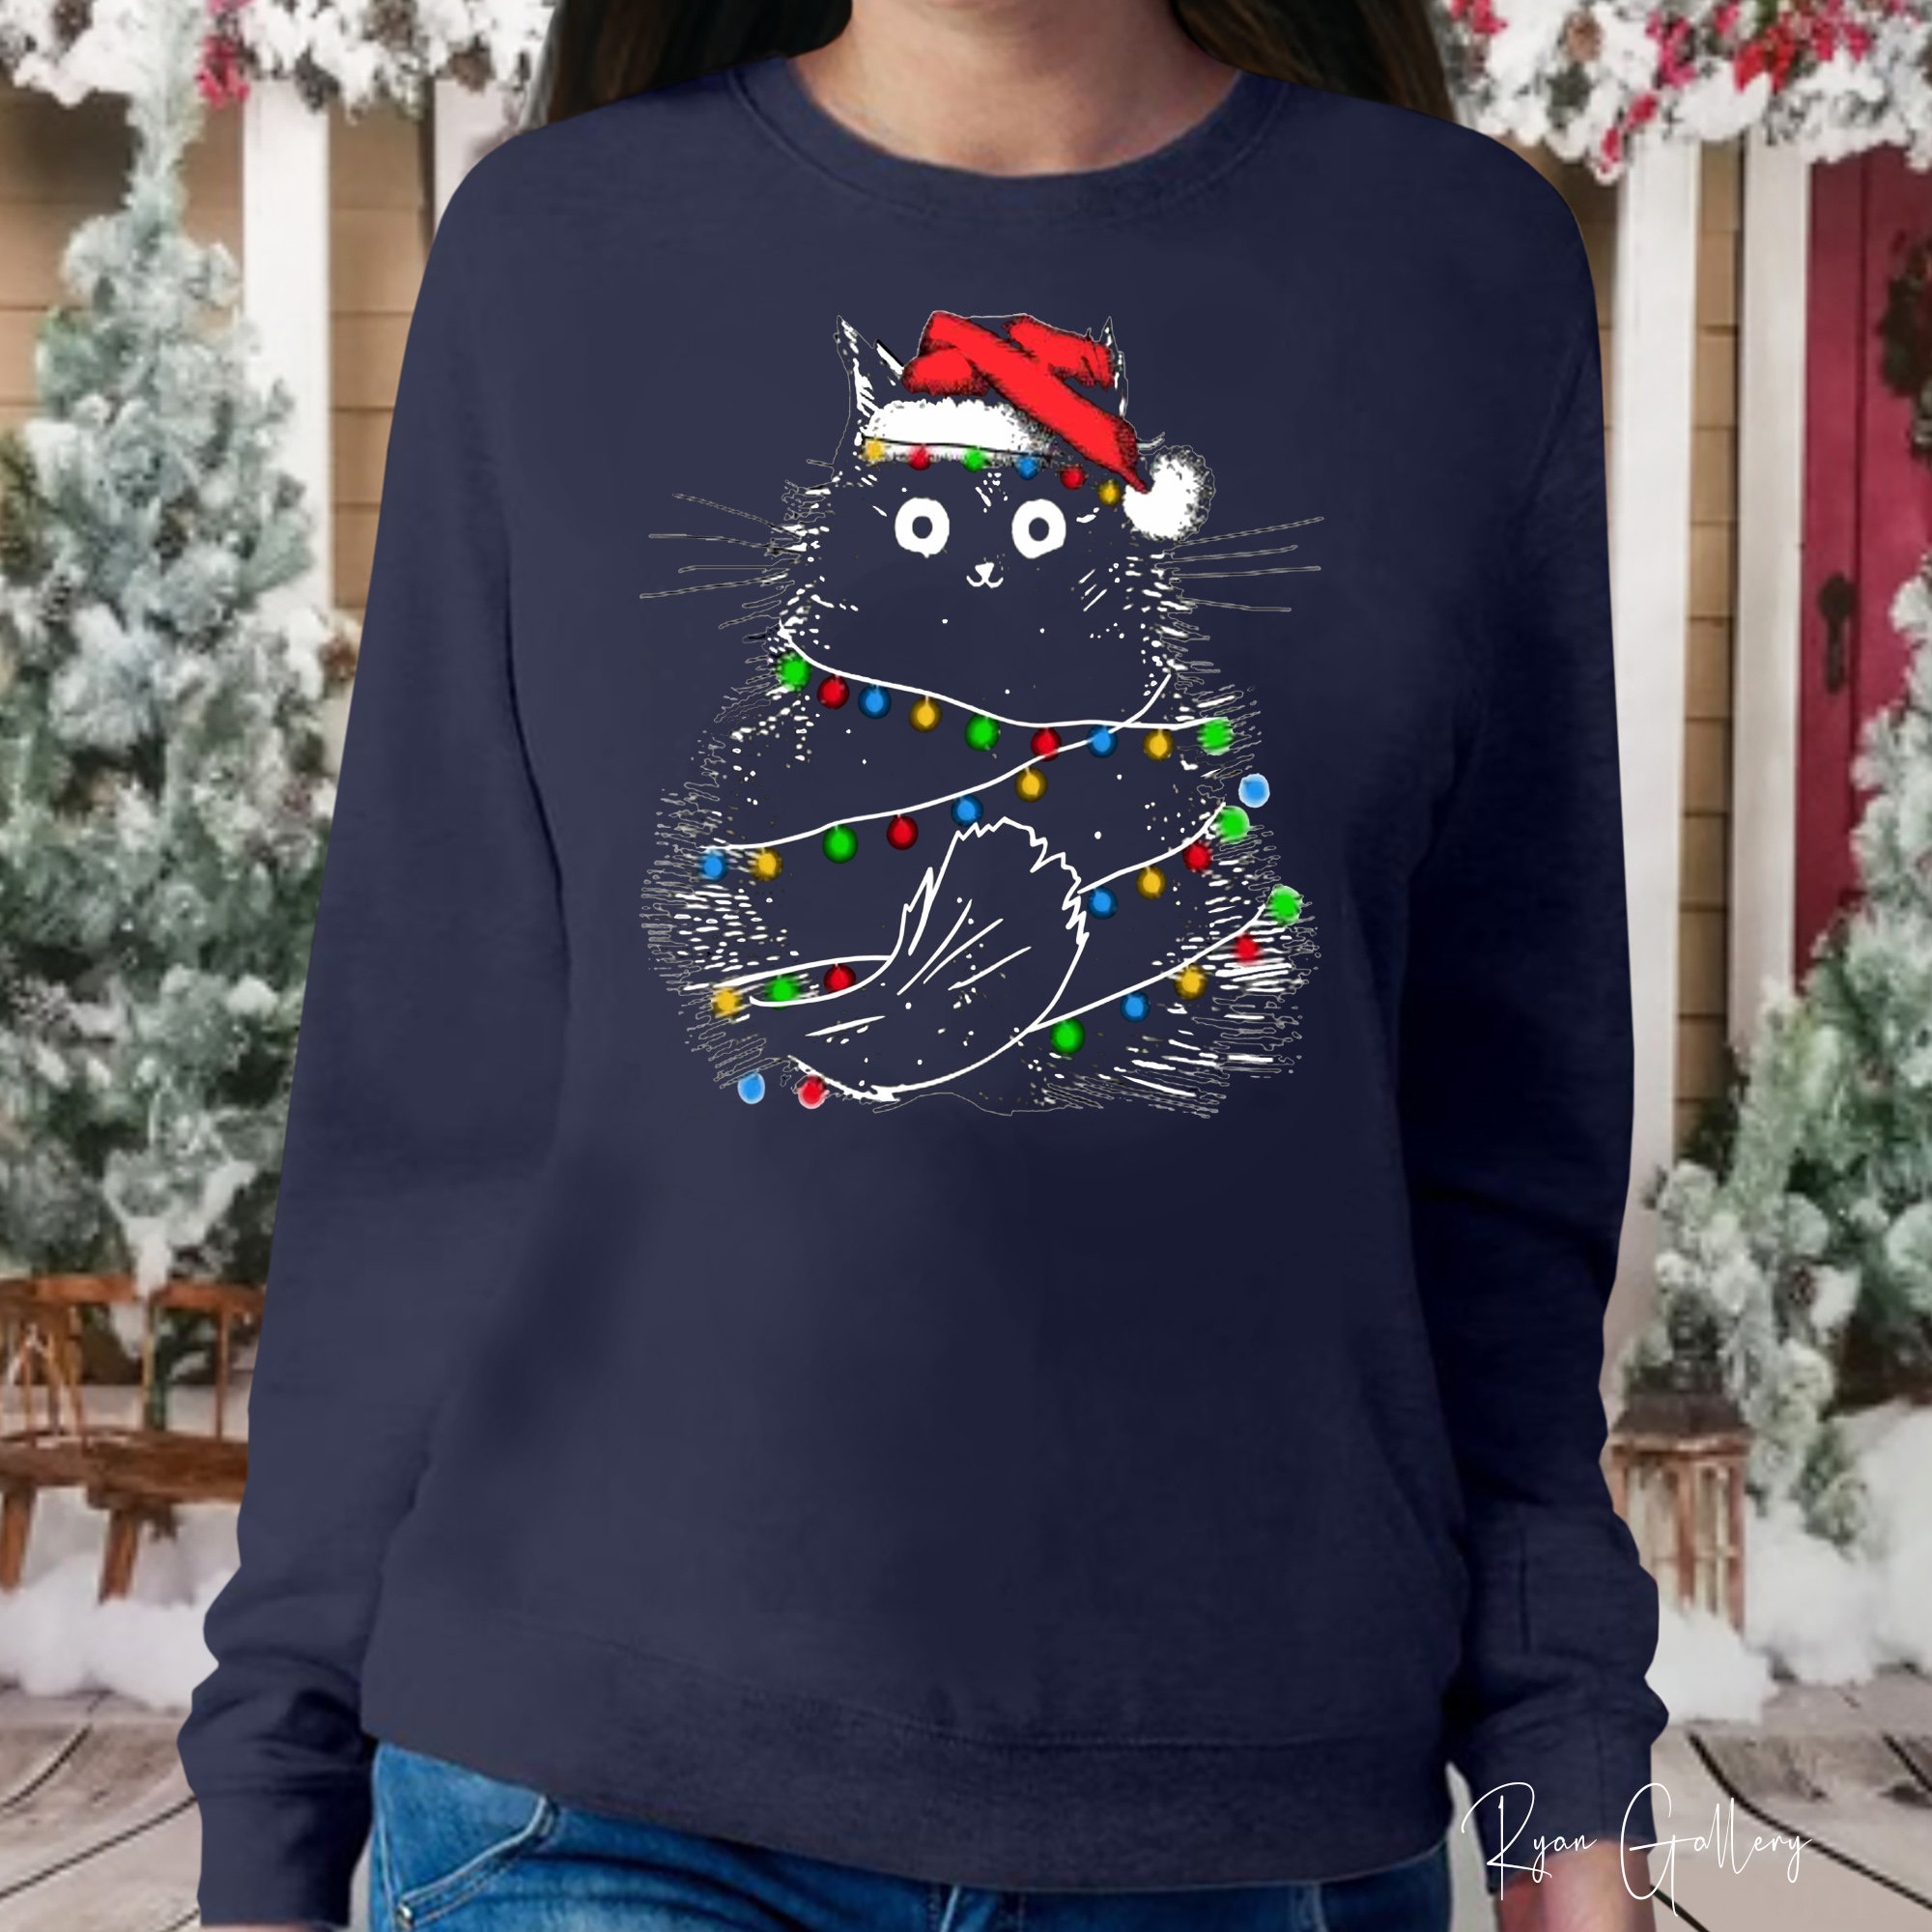 Family Hat Sweatshirt, Cute Lights Jumper, Etsy Sweatshirt With Cats Christmas Christmas Presents Gifts Santa Xmas Fluffy - Fluffy Cats Christmas